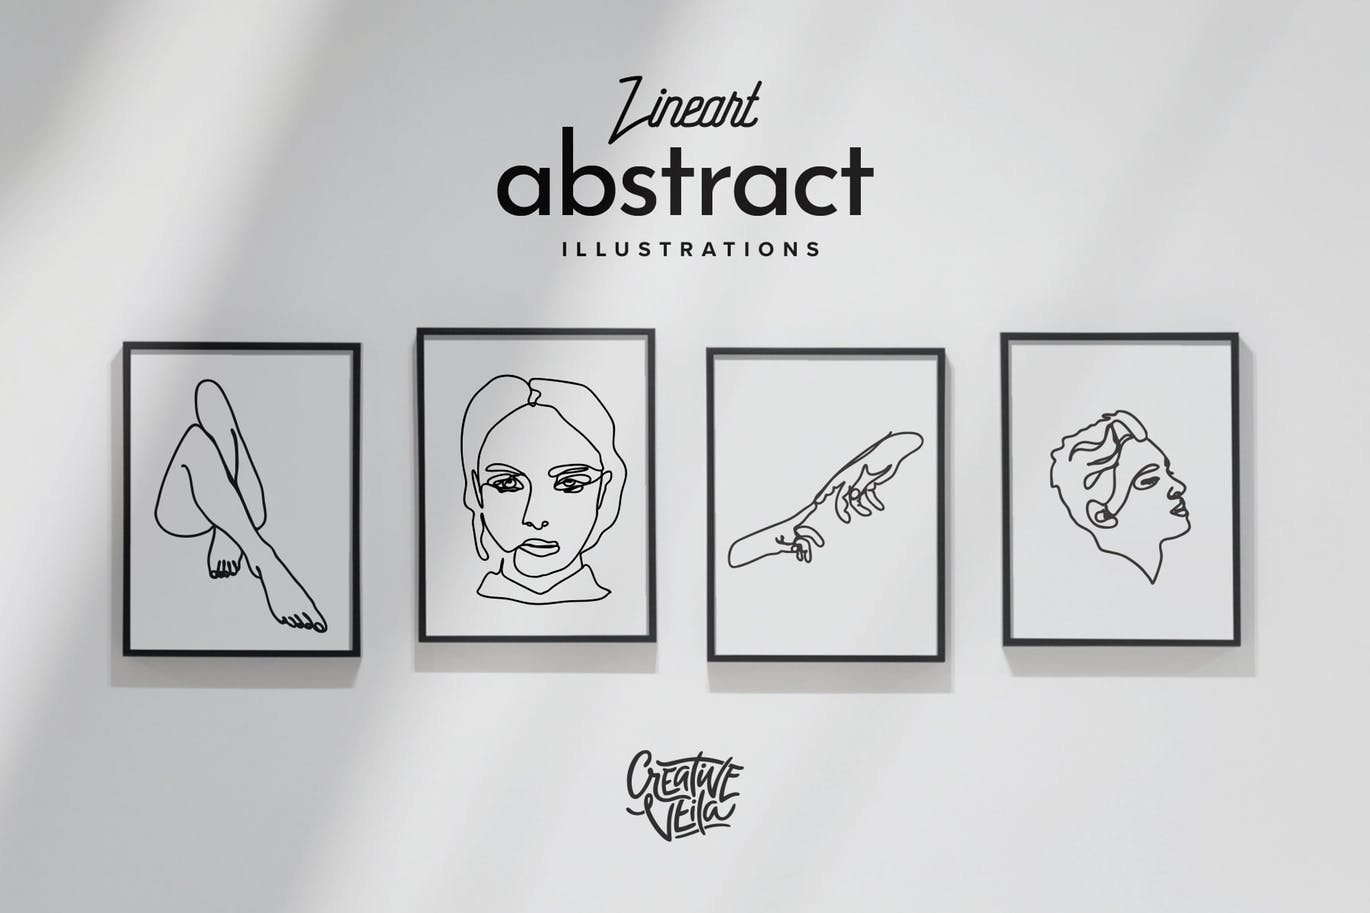 抽象高端手绘线条艺术矢量插画海报设计模板集合 lineart-abstract-vector-illustrations